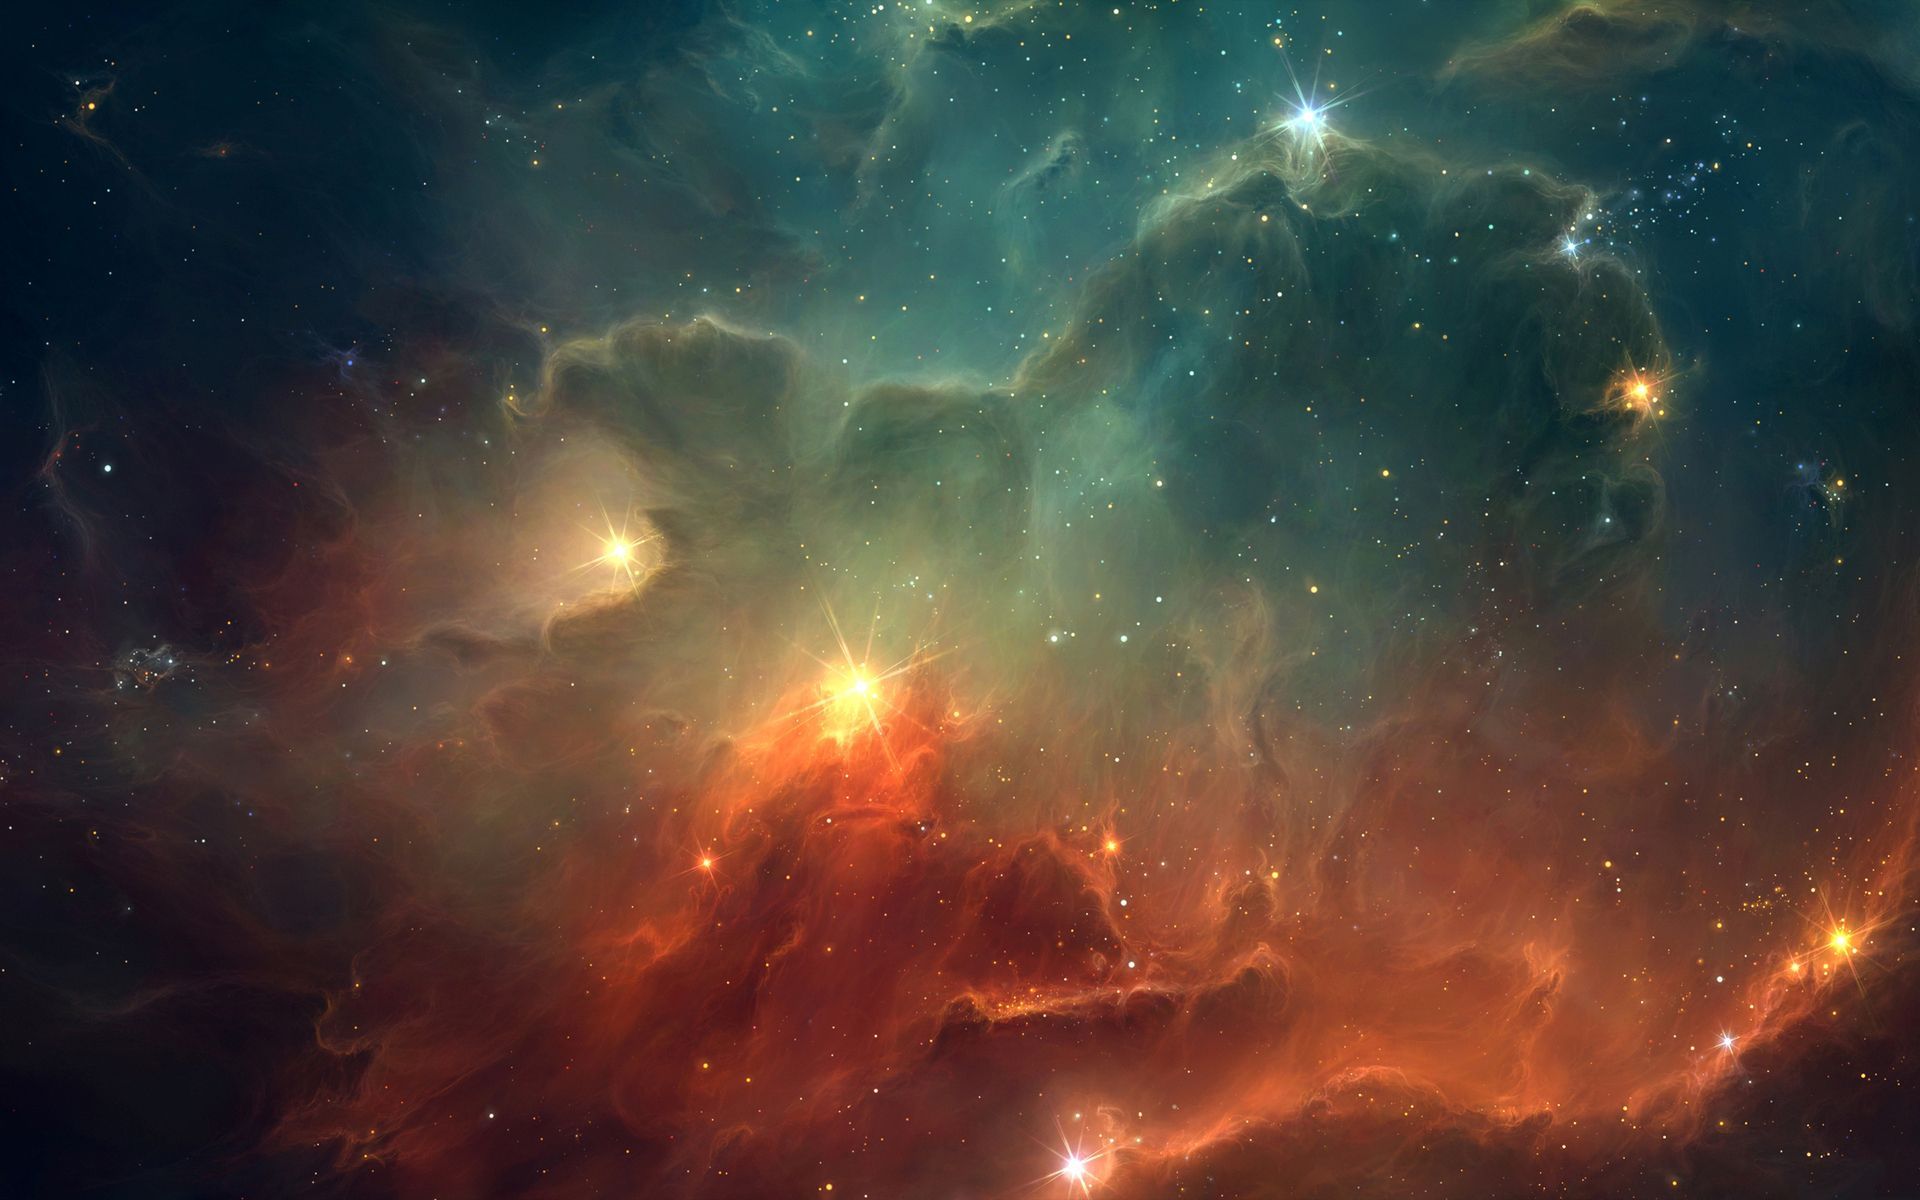 Sci fi science fiction space universe nebulas stars wallpaper